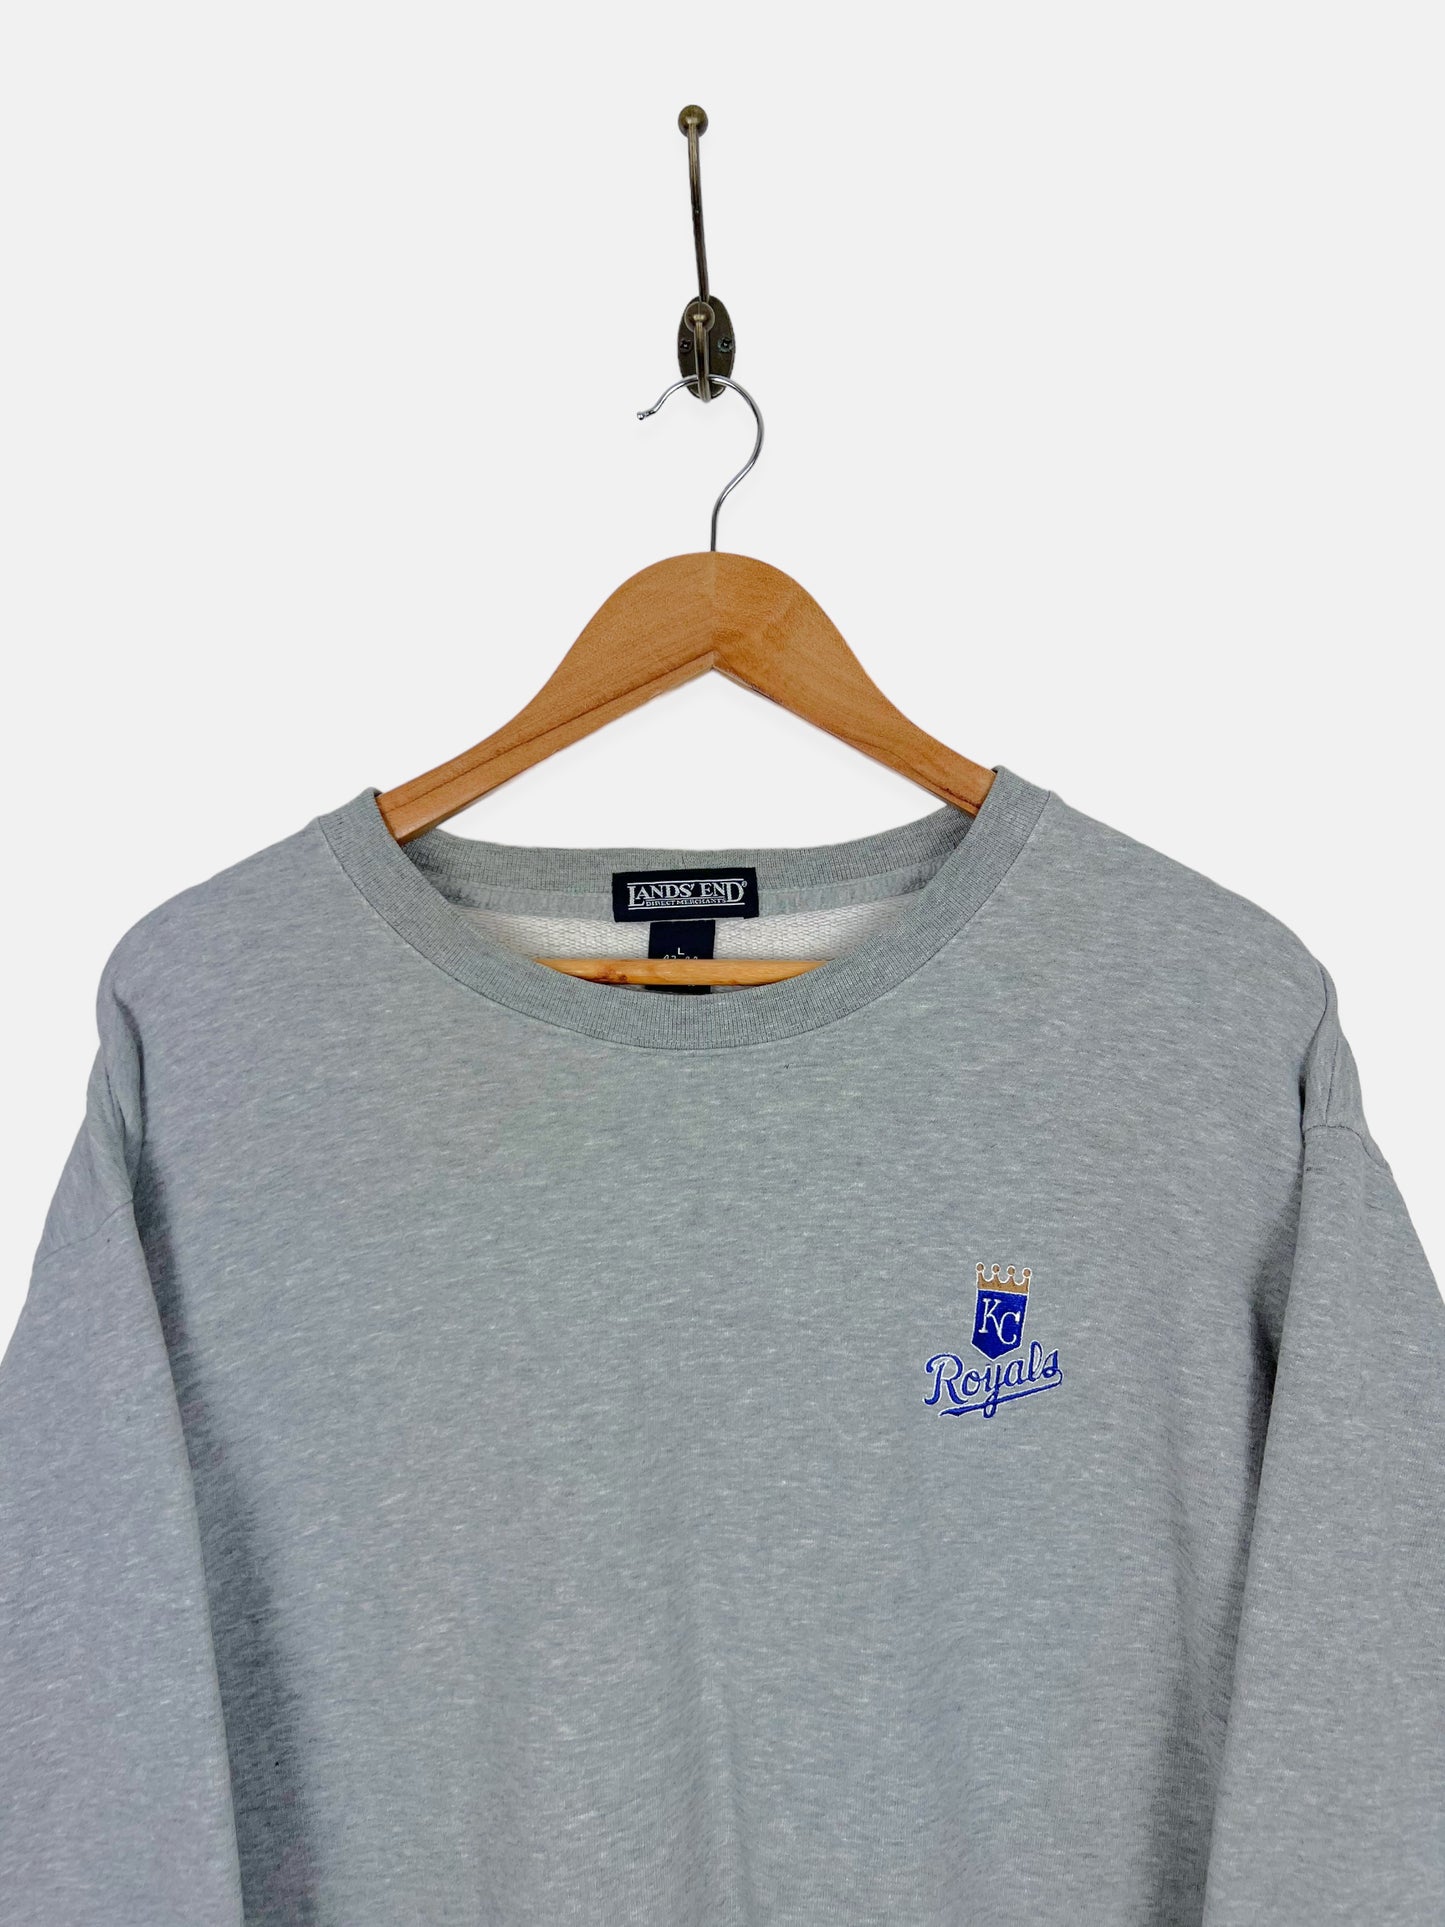 90's Kansas City Royals Embroidered Vintage Sweatshirt Size L